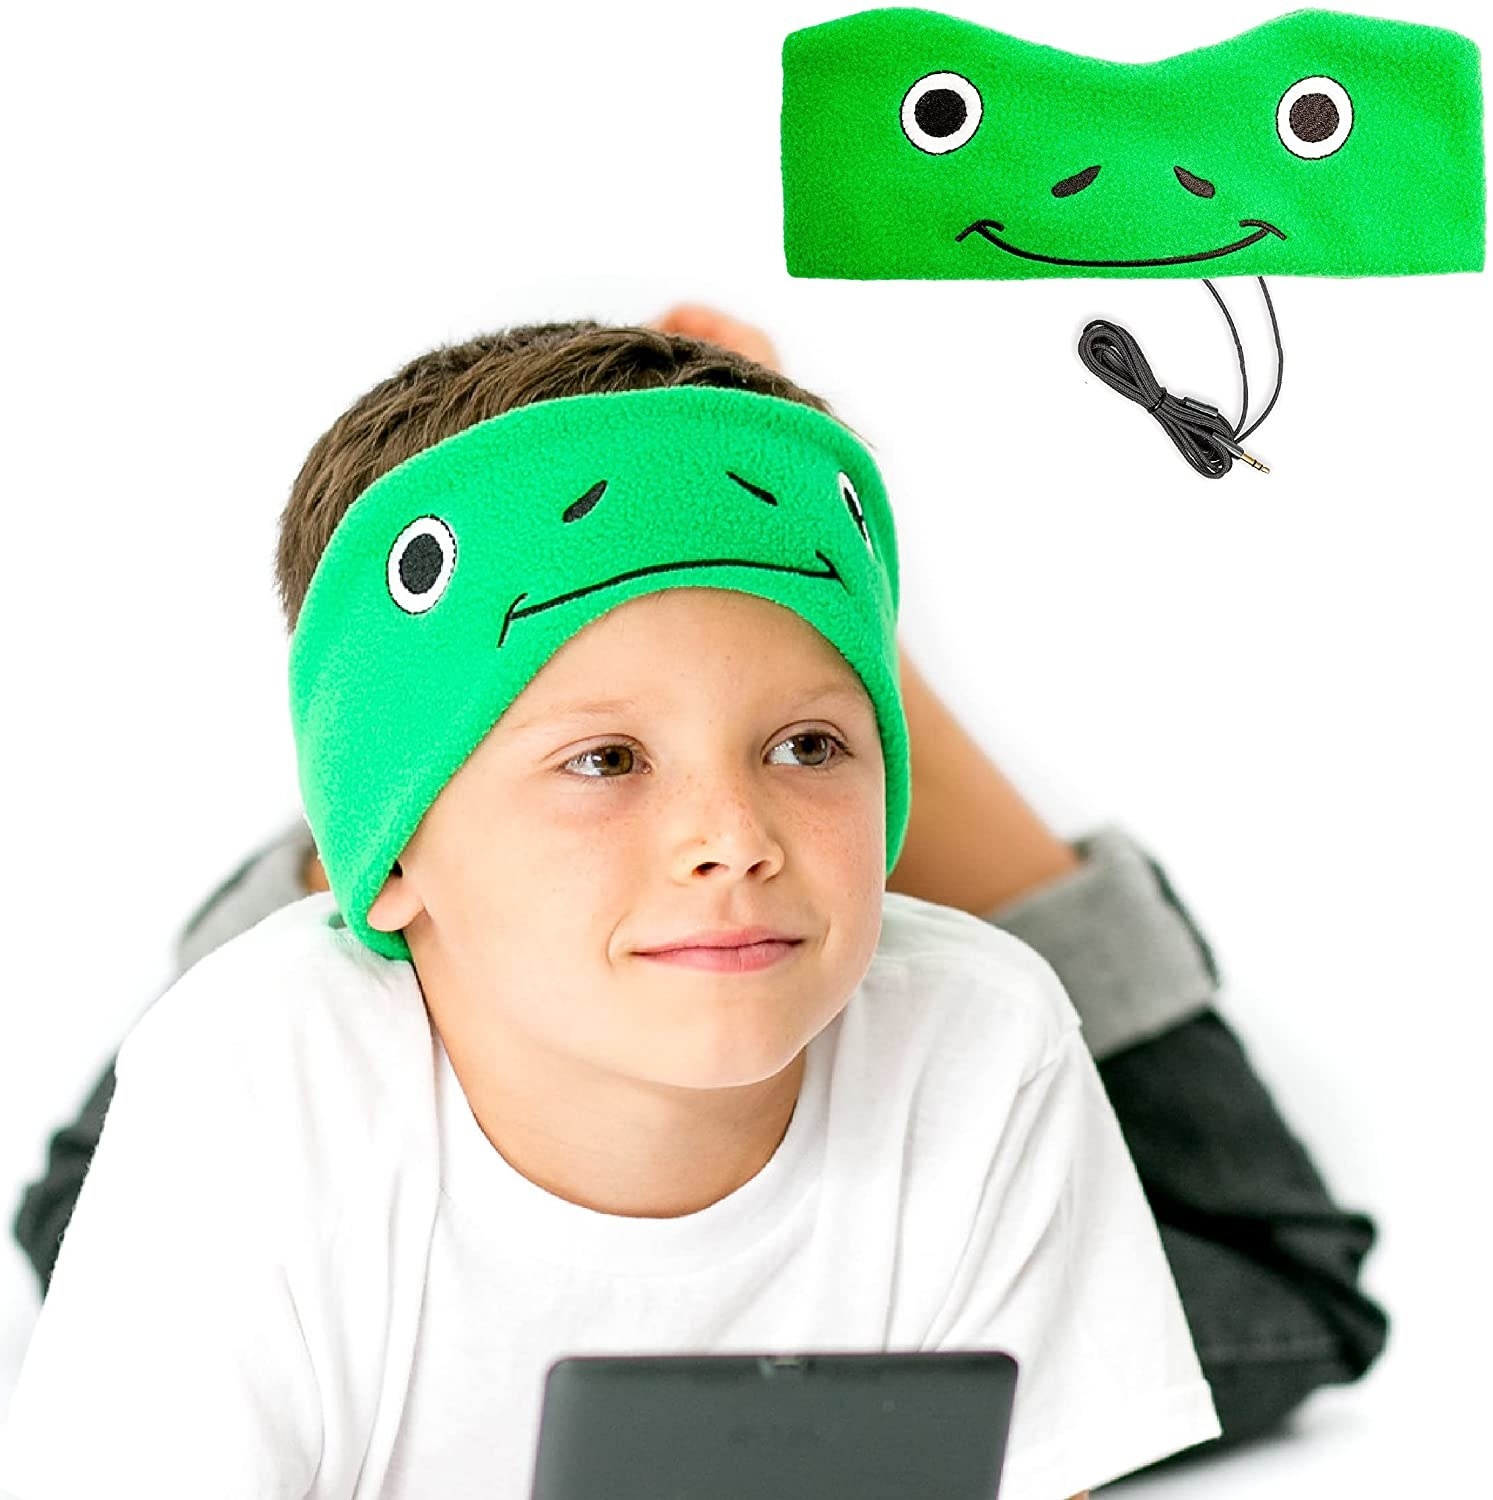 Child wearing frog-themed wrap around headband earphones